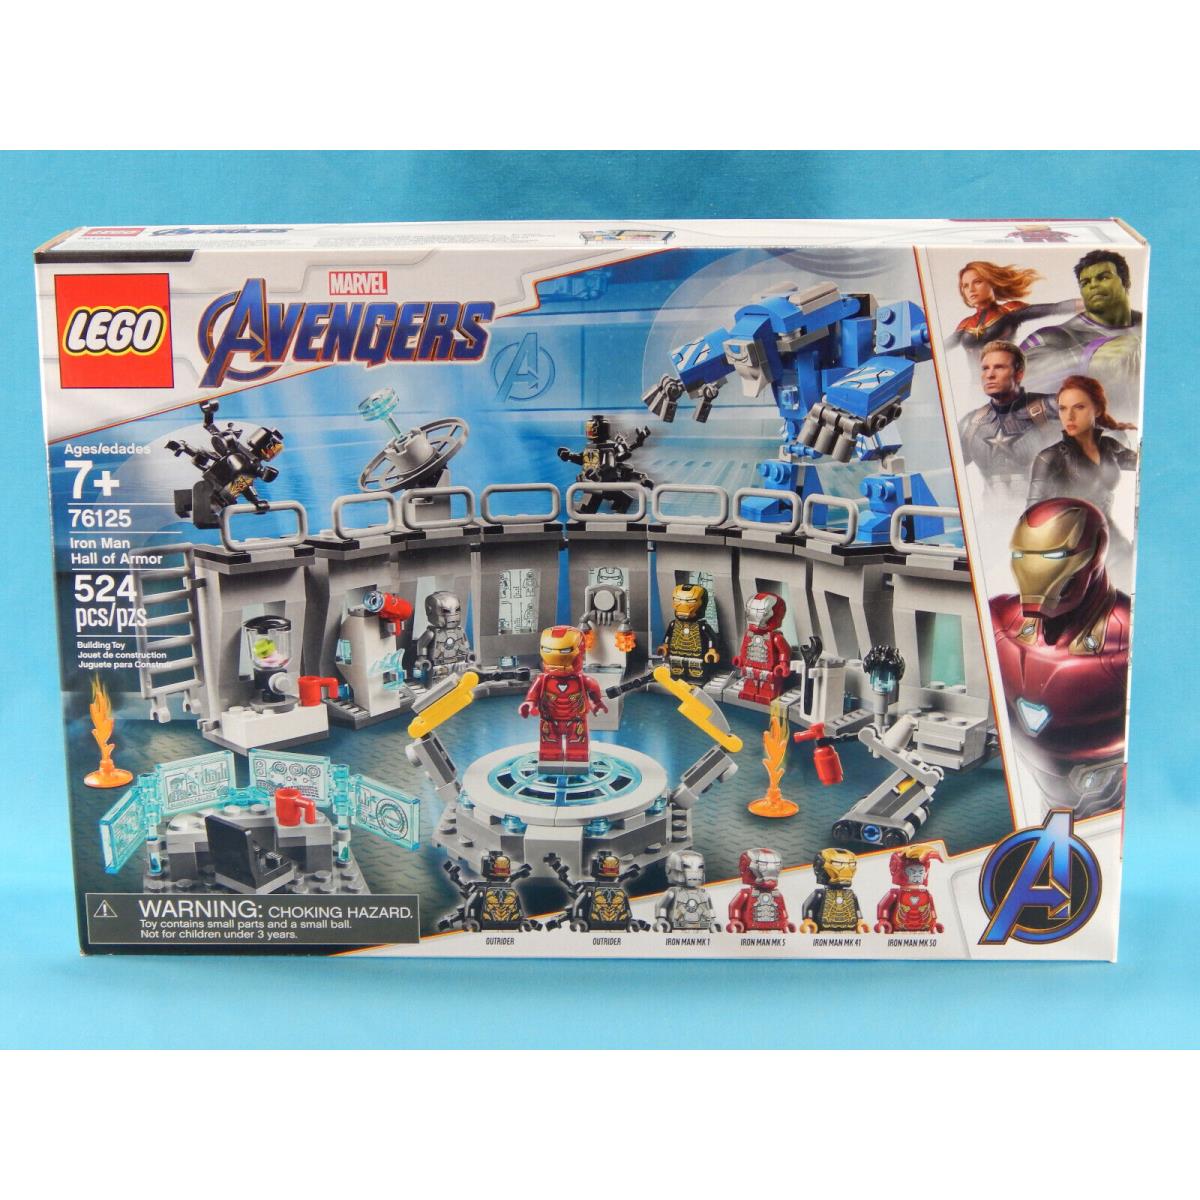 Lego Avengers 76125 Iron Man Hall of Armor 524pcs 2019 Super Heroes